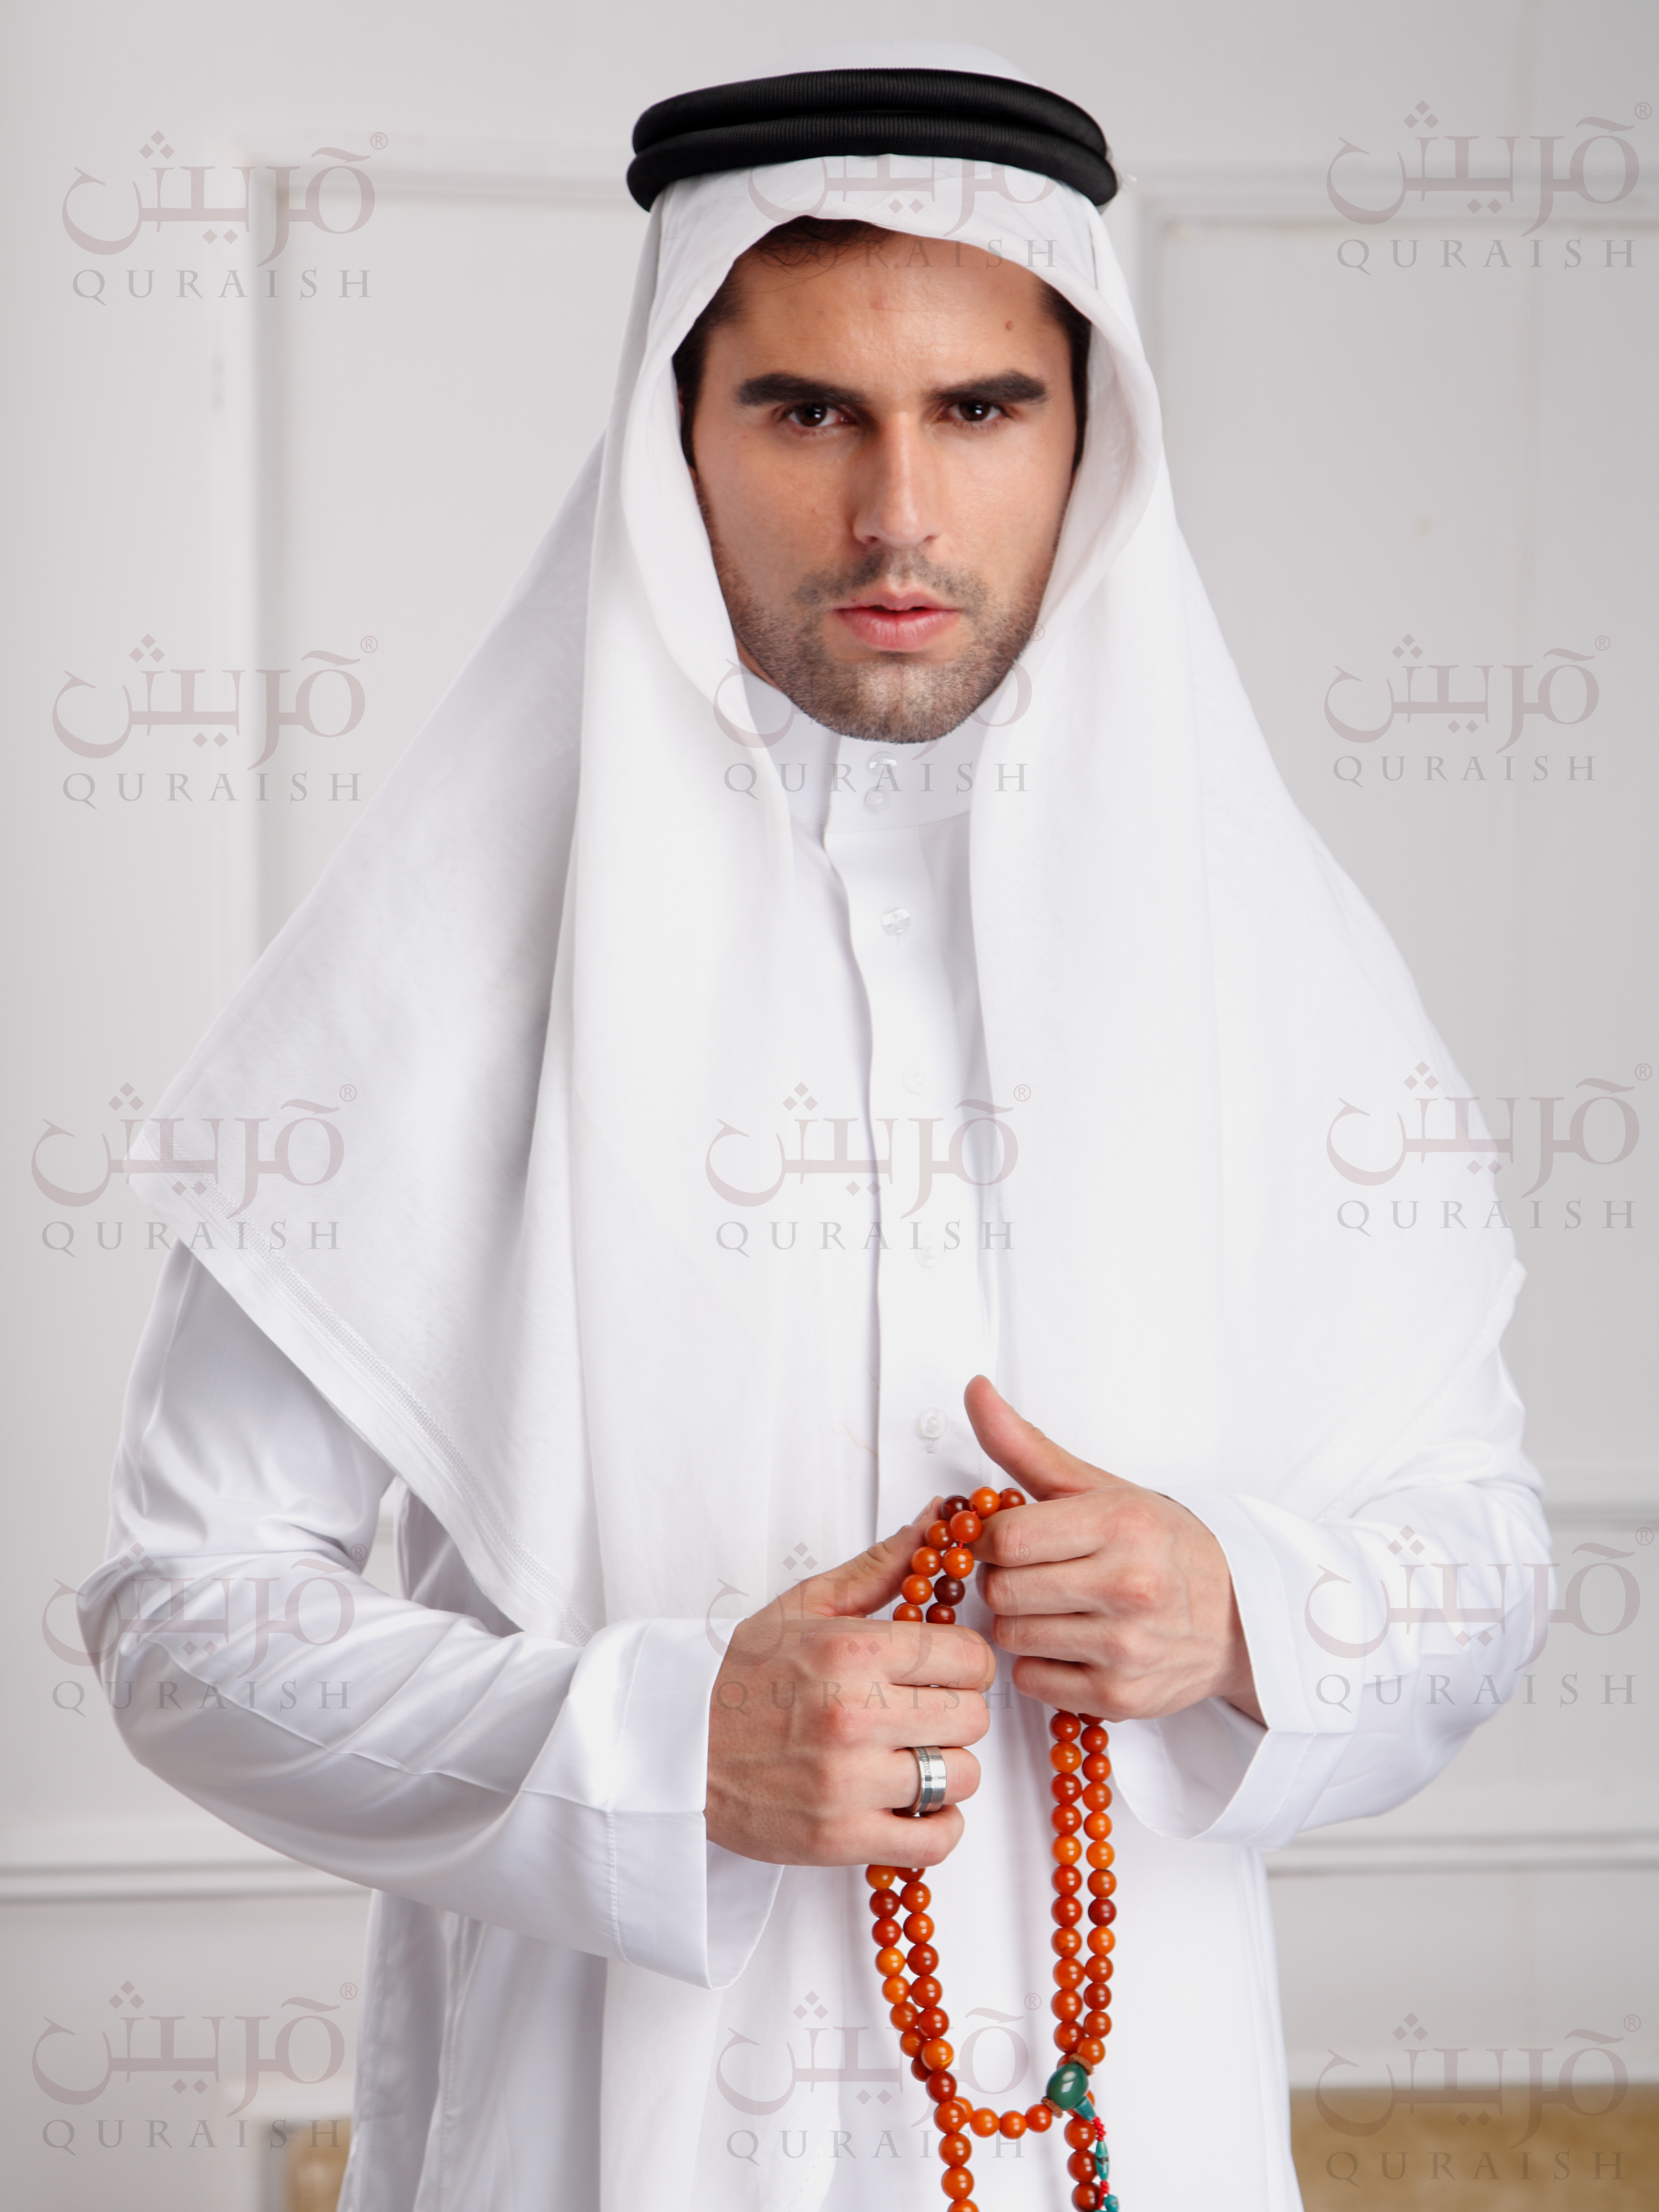 Arab men's clothing 